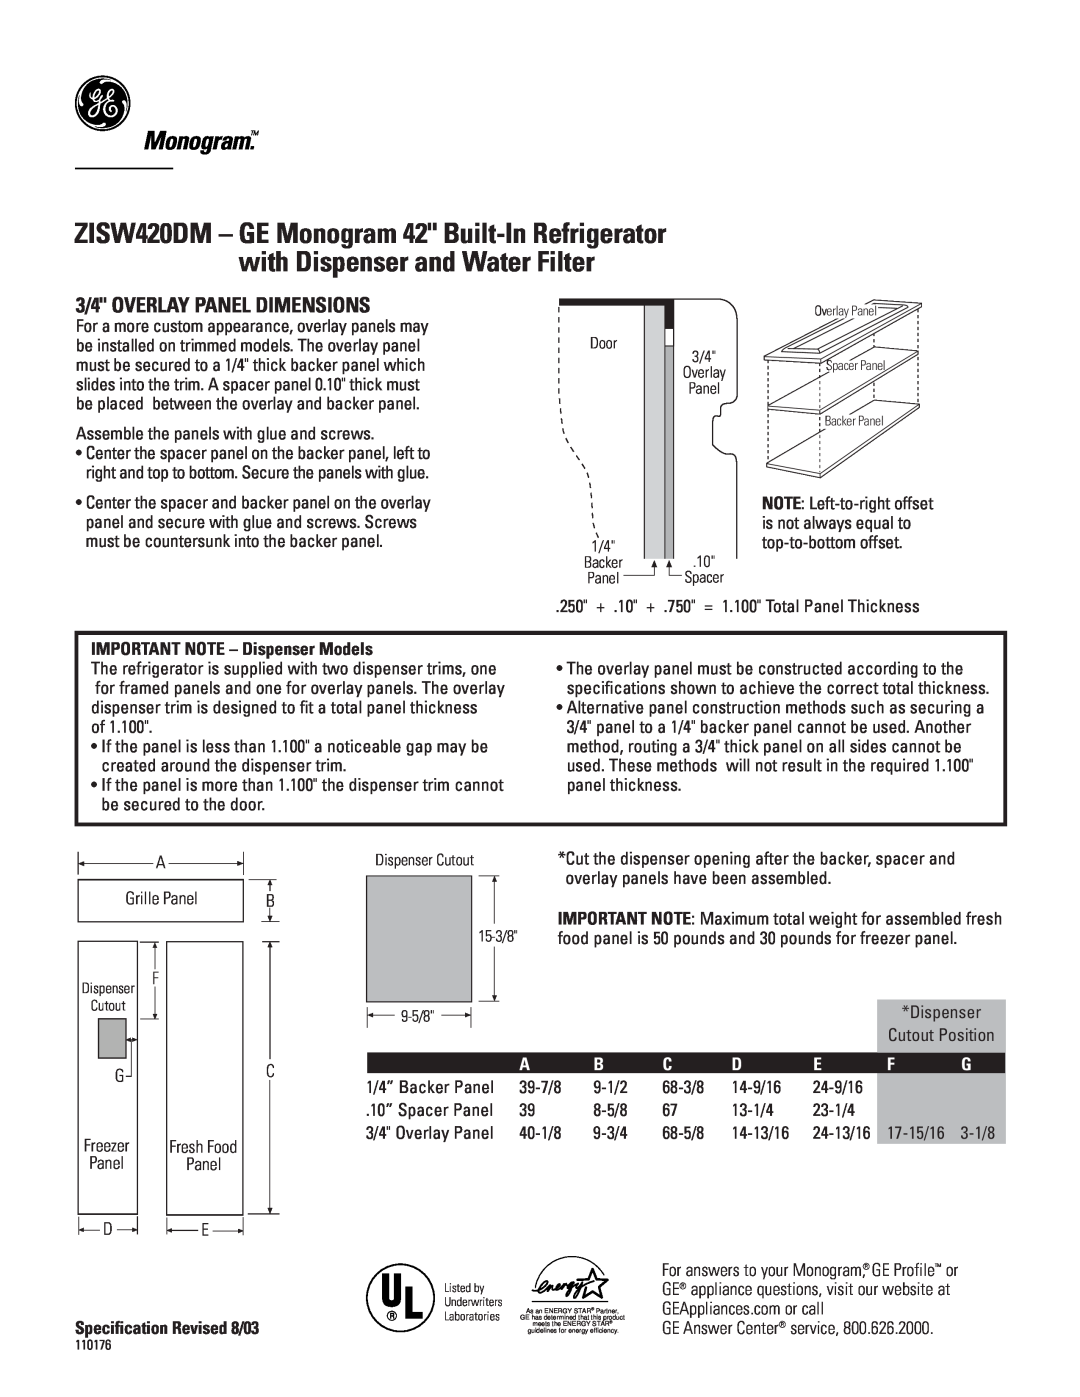 GE ZISW420DM Monogram, 3/4 OVERLAY PANEL DIMENSIONS, IMPORTANT NOTE - Dispenser Models, Specification Revised 8/03 